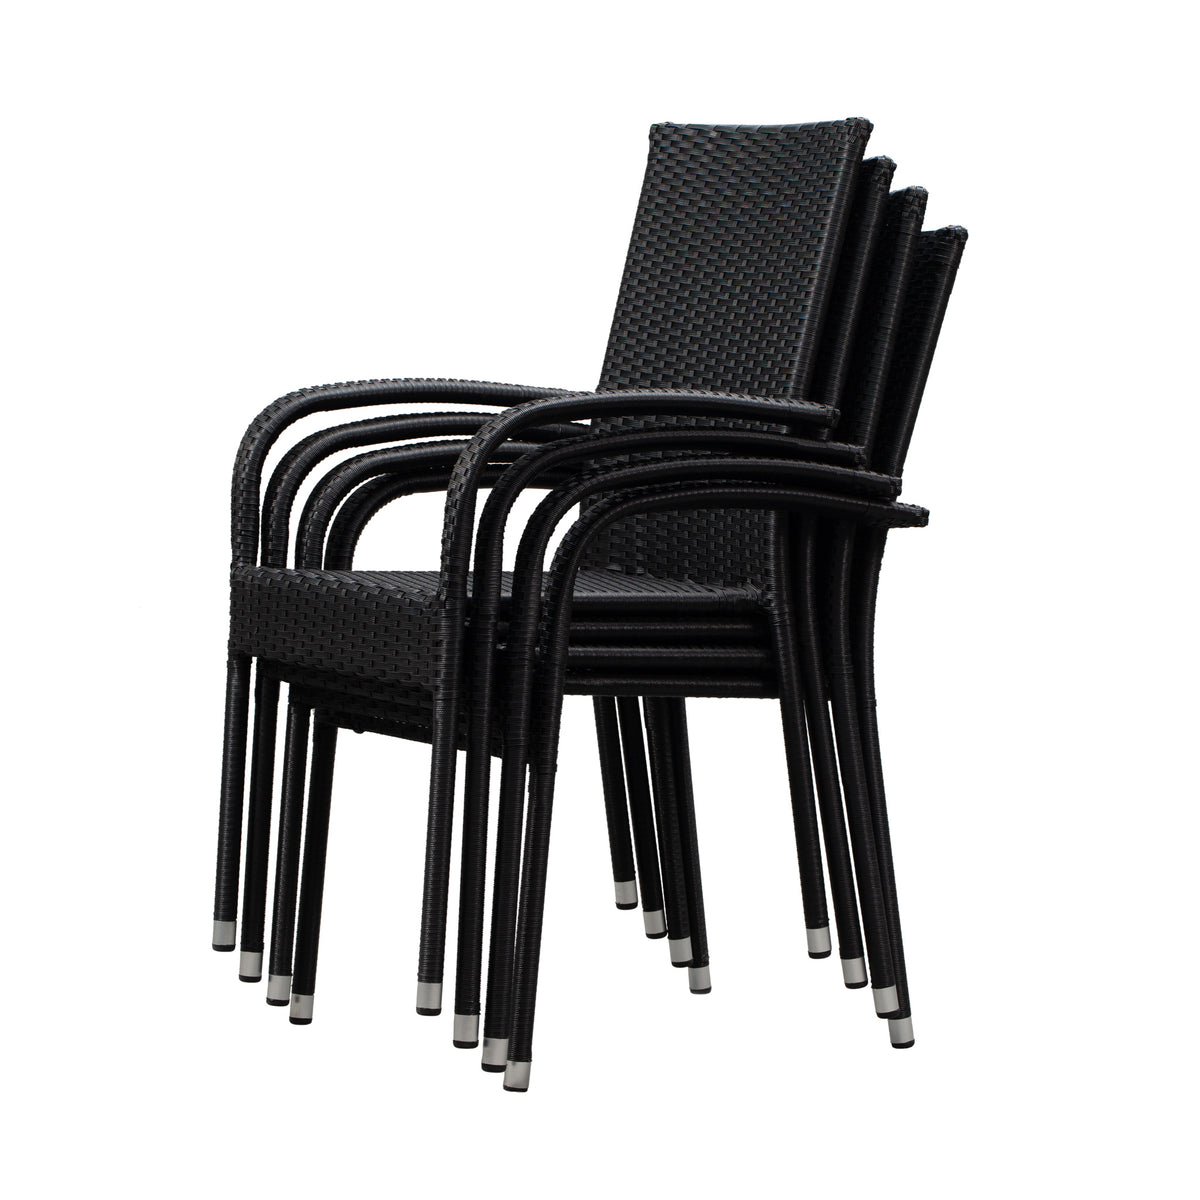 Morgan Outdoor Wicker Chair - Black - Set of 4 – Fire Sense